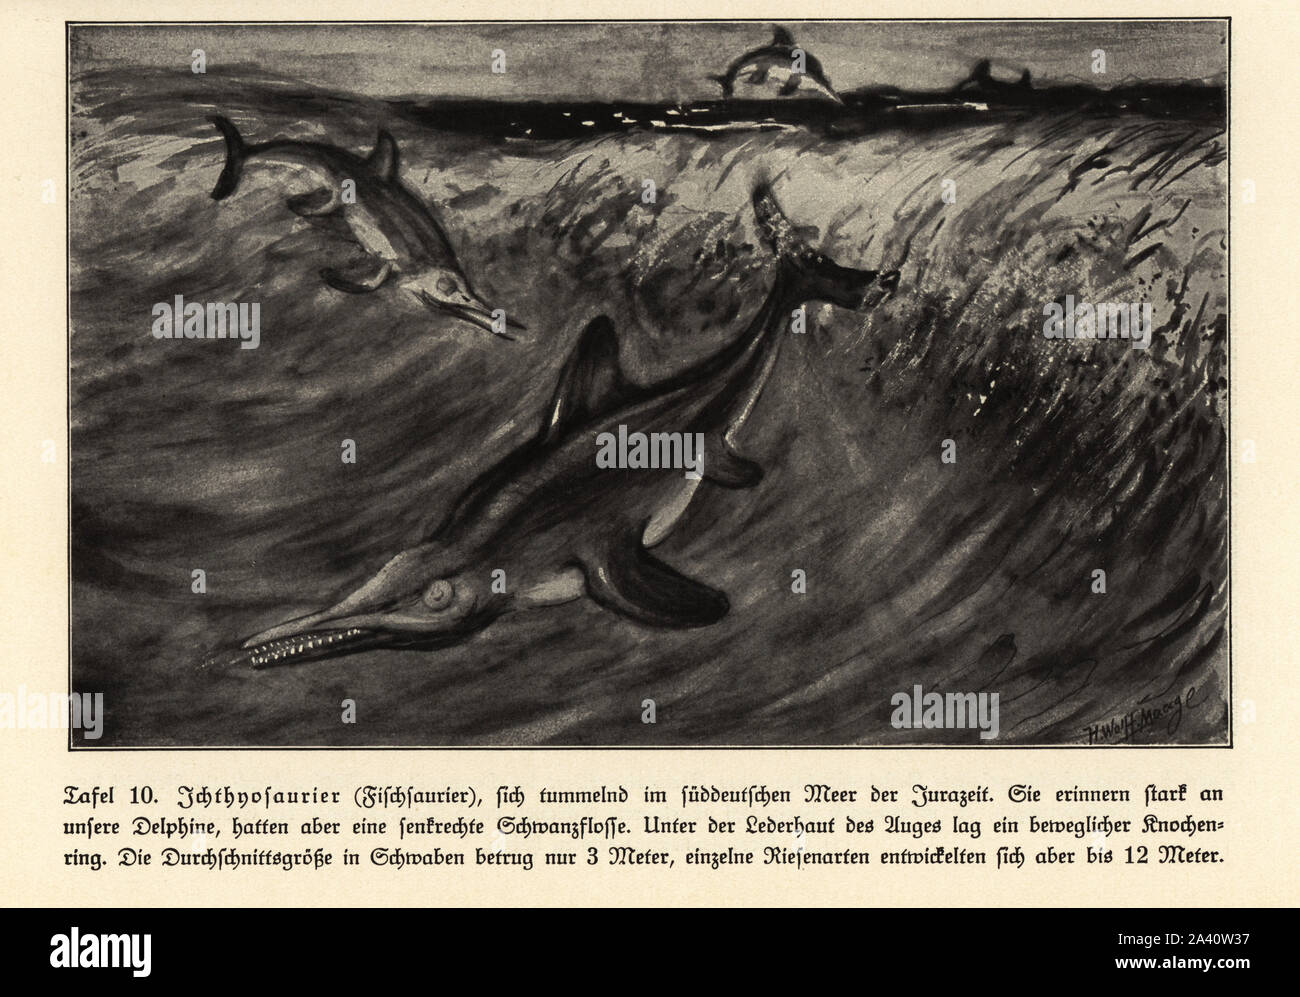 Reproduction of extinct Ichthyosaurs in the South German Sea, Jurassic era. Illustration by Hugo Wolff-Maage from Wilhelm Bolsche’s Das Leben der Urwelt, Prehistoric Life, Georg Dollheimer, Leipzig, 1932. Stock Photo